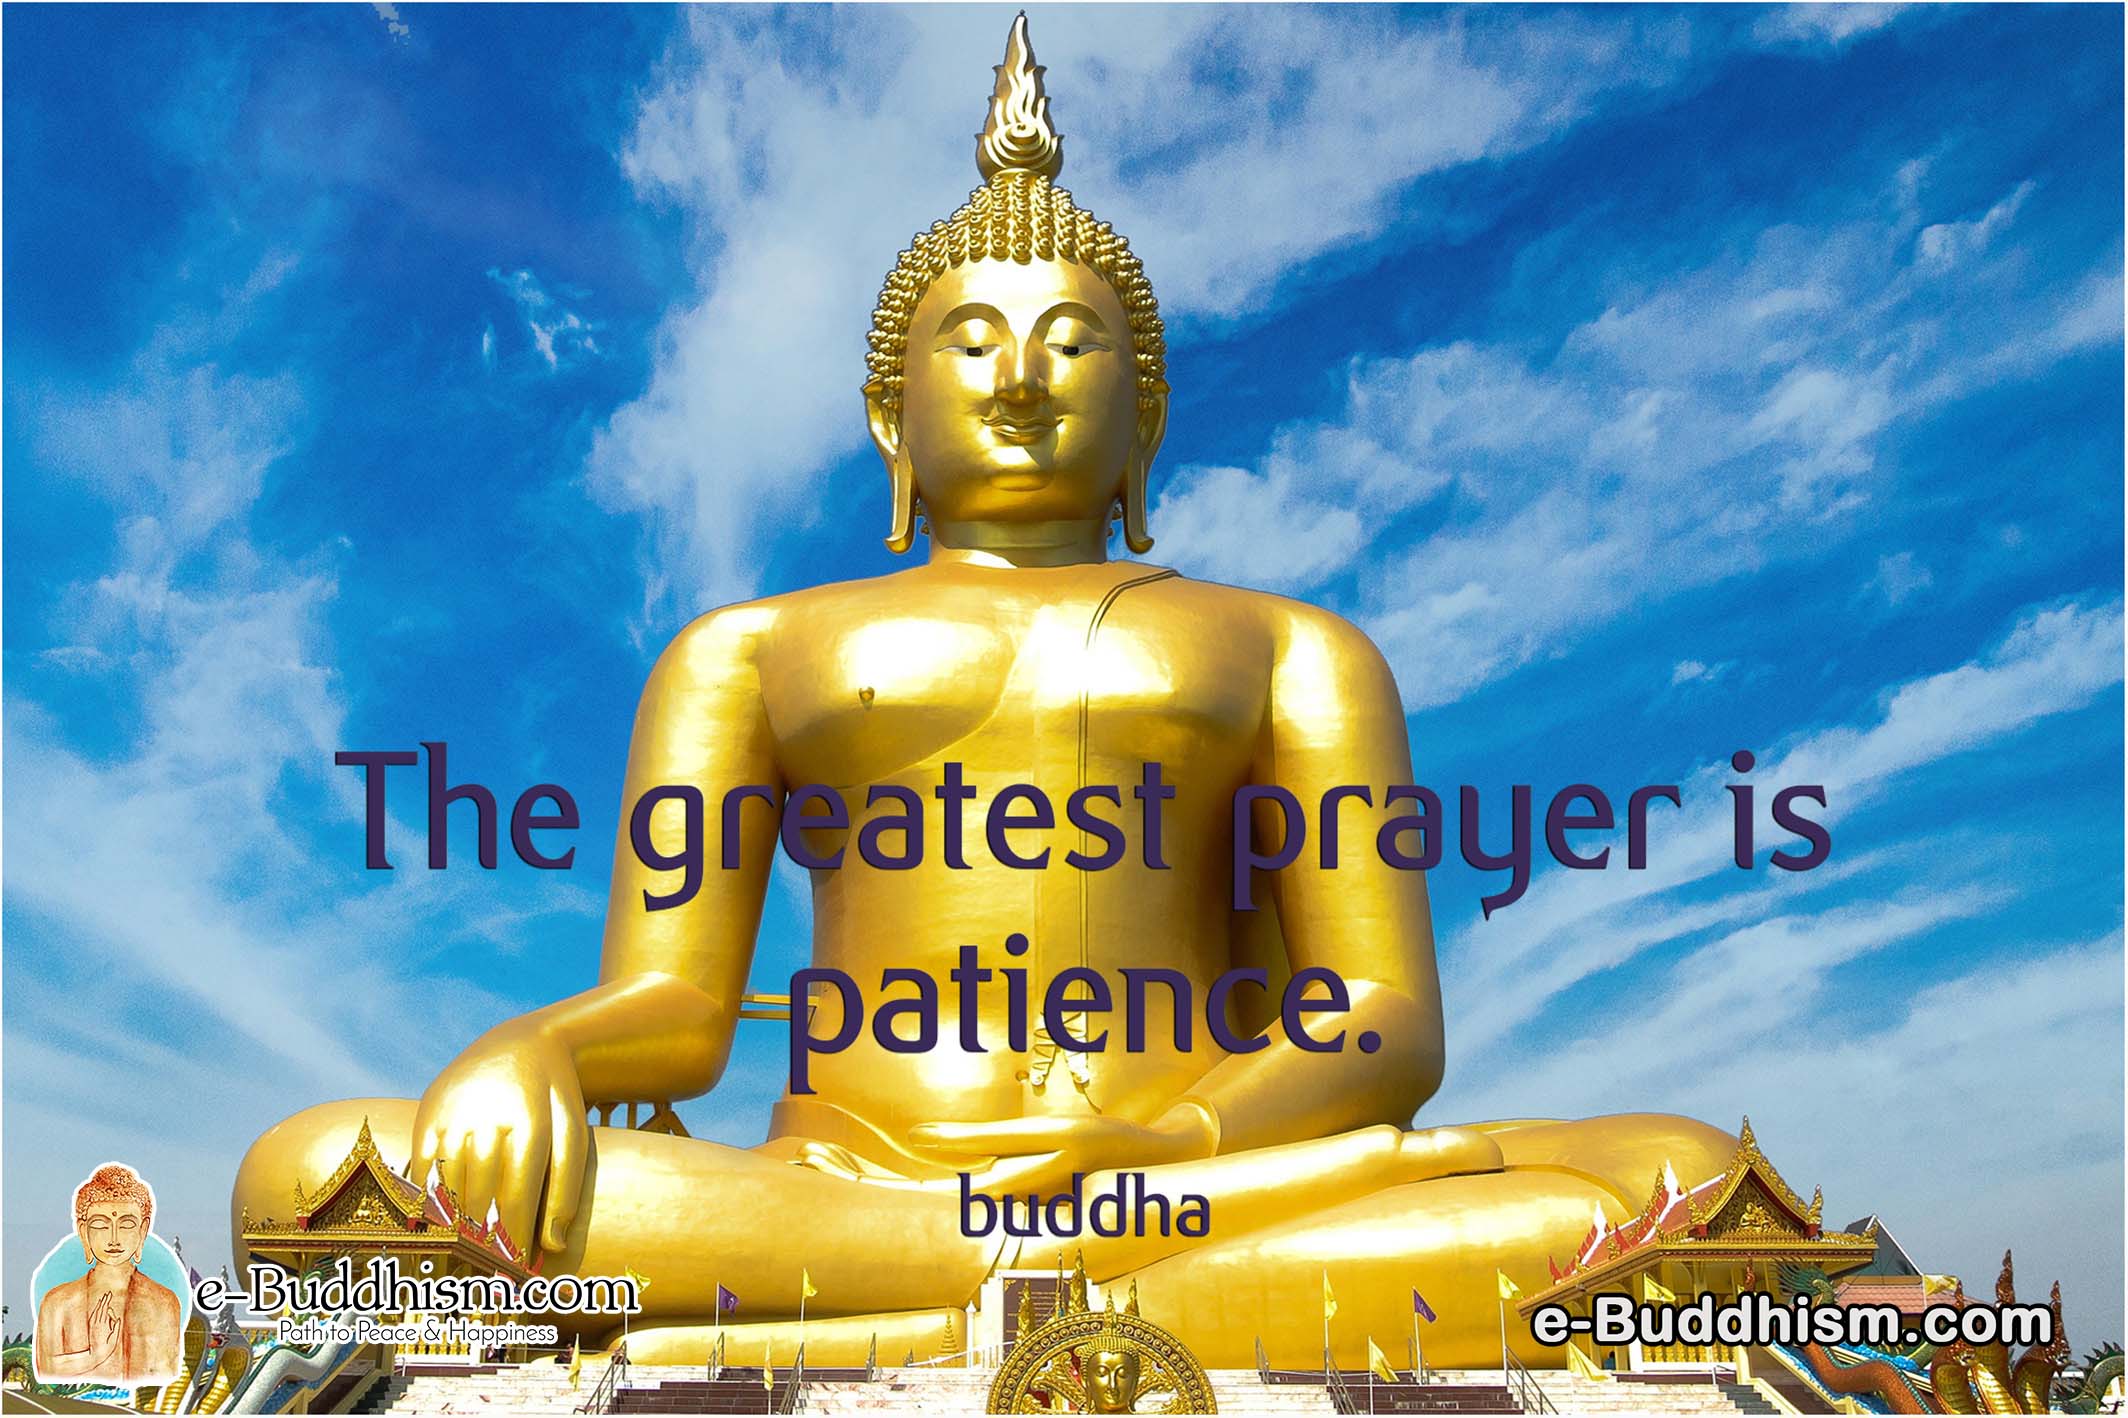 The greatest prayer is patience. -Buddha